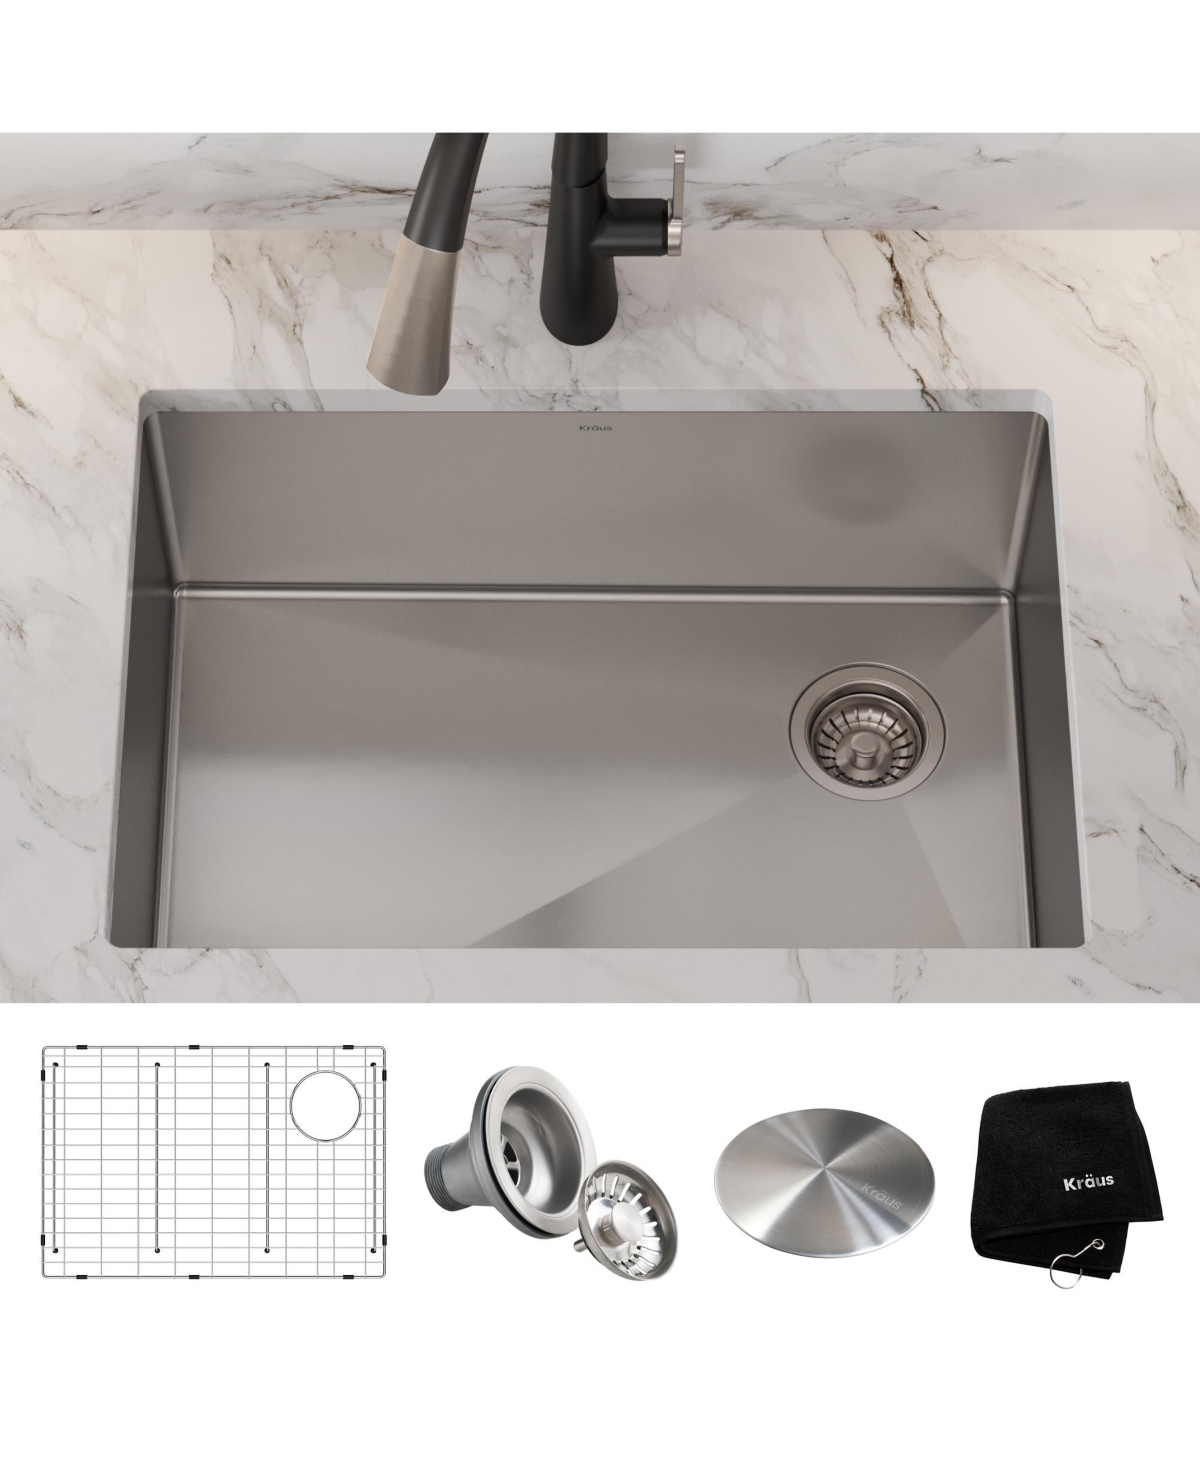 Standart Pro 25 in. 16 Gauge Undermount Single Bowl Stainless Steel Kitchen Sink - Stainless steel